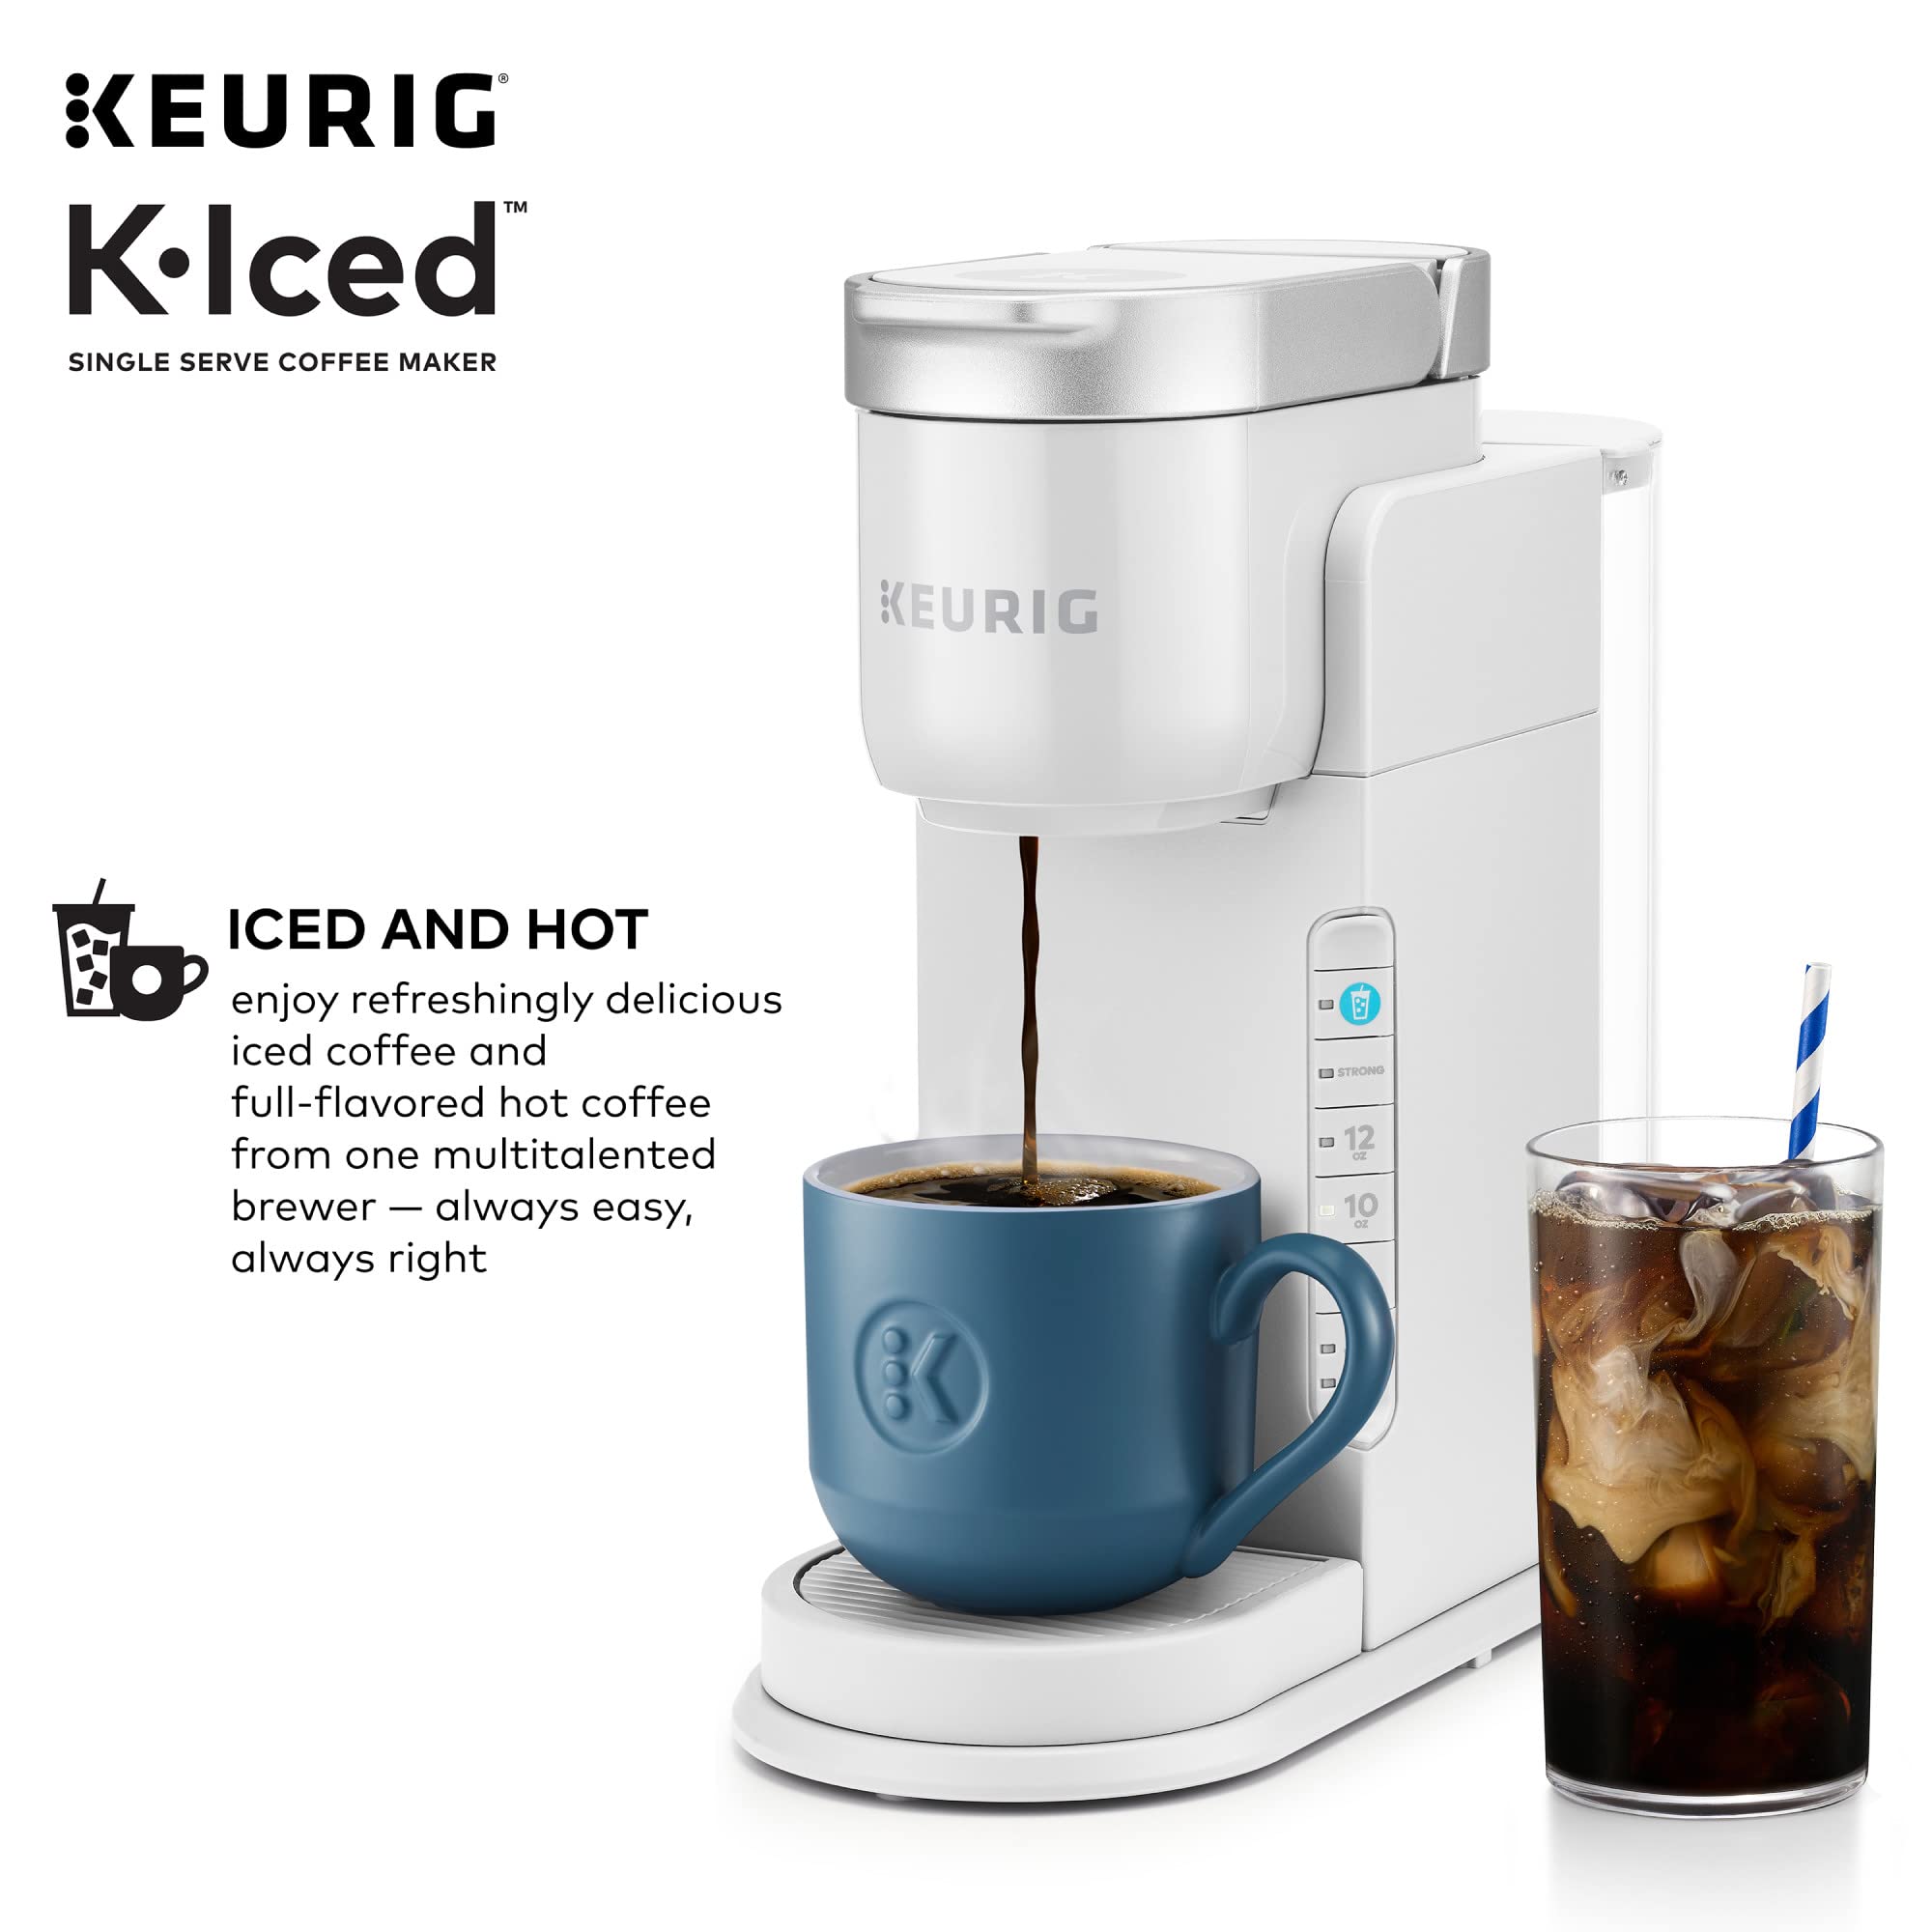 Keurig K-Iced Single Serve Coffee Maker, White